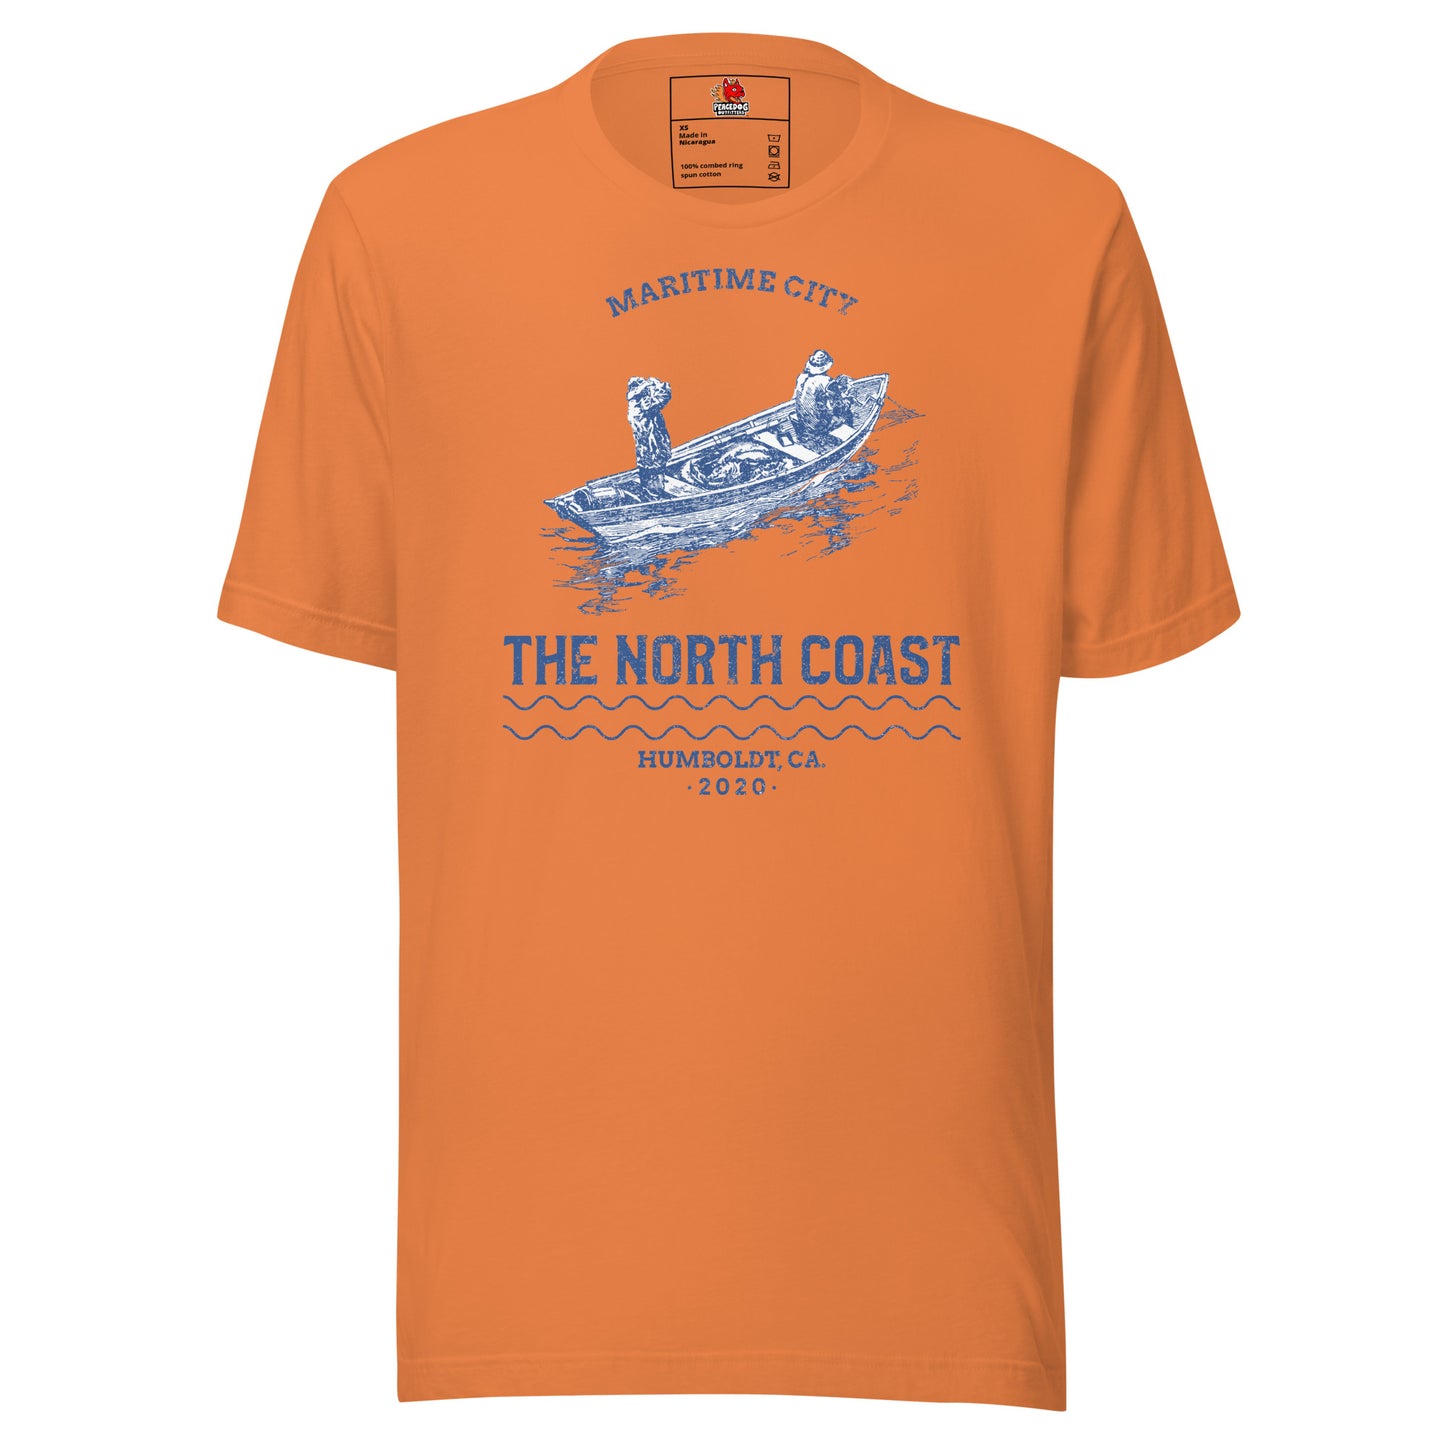 The North Coast T-shirt